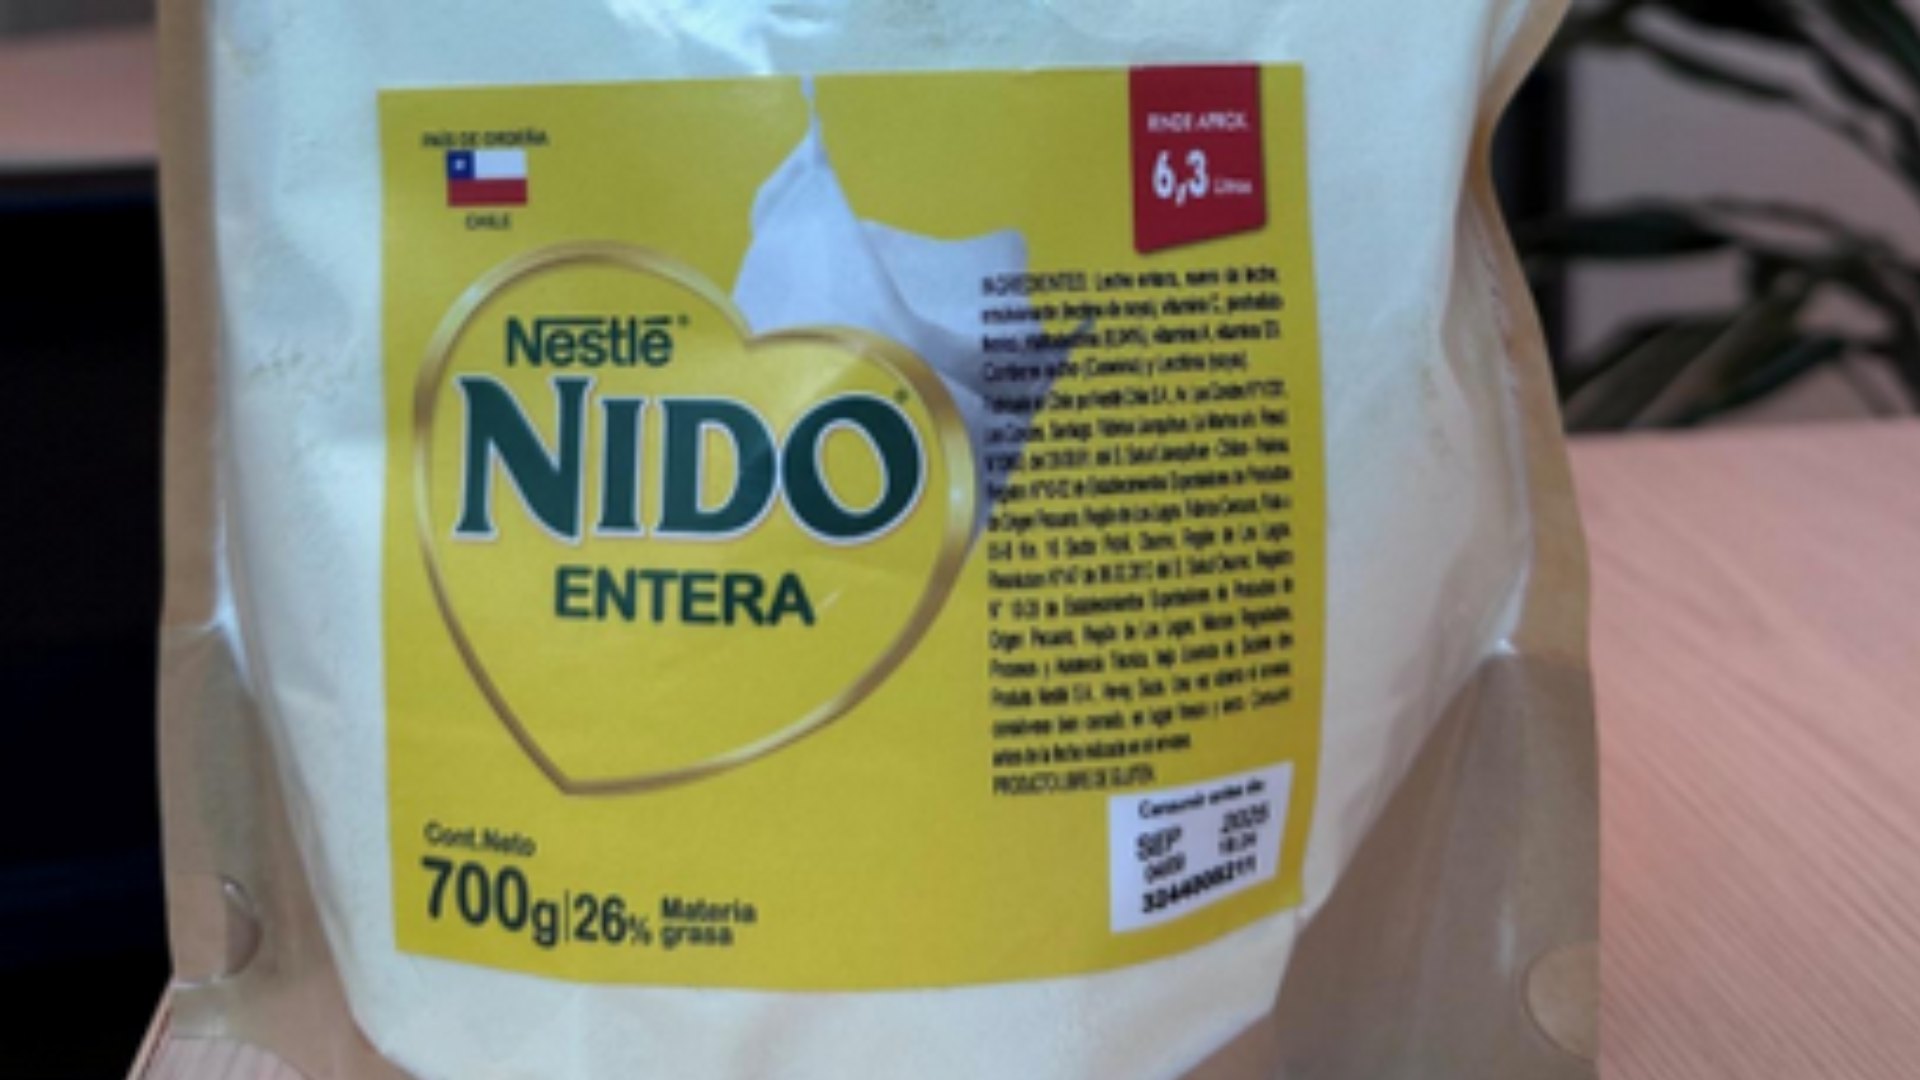 Nestlé alerta que leche Nido falsa se detectó en Valparaíso y RM